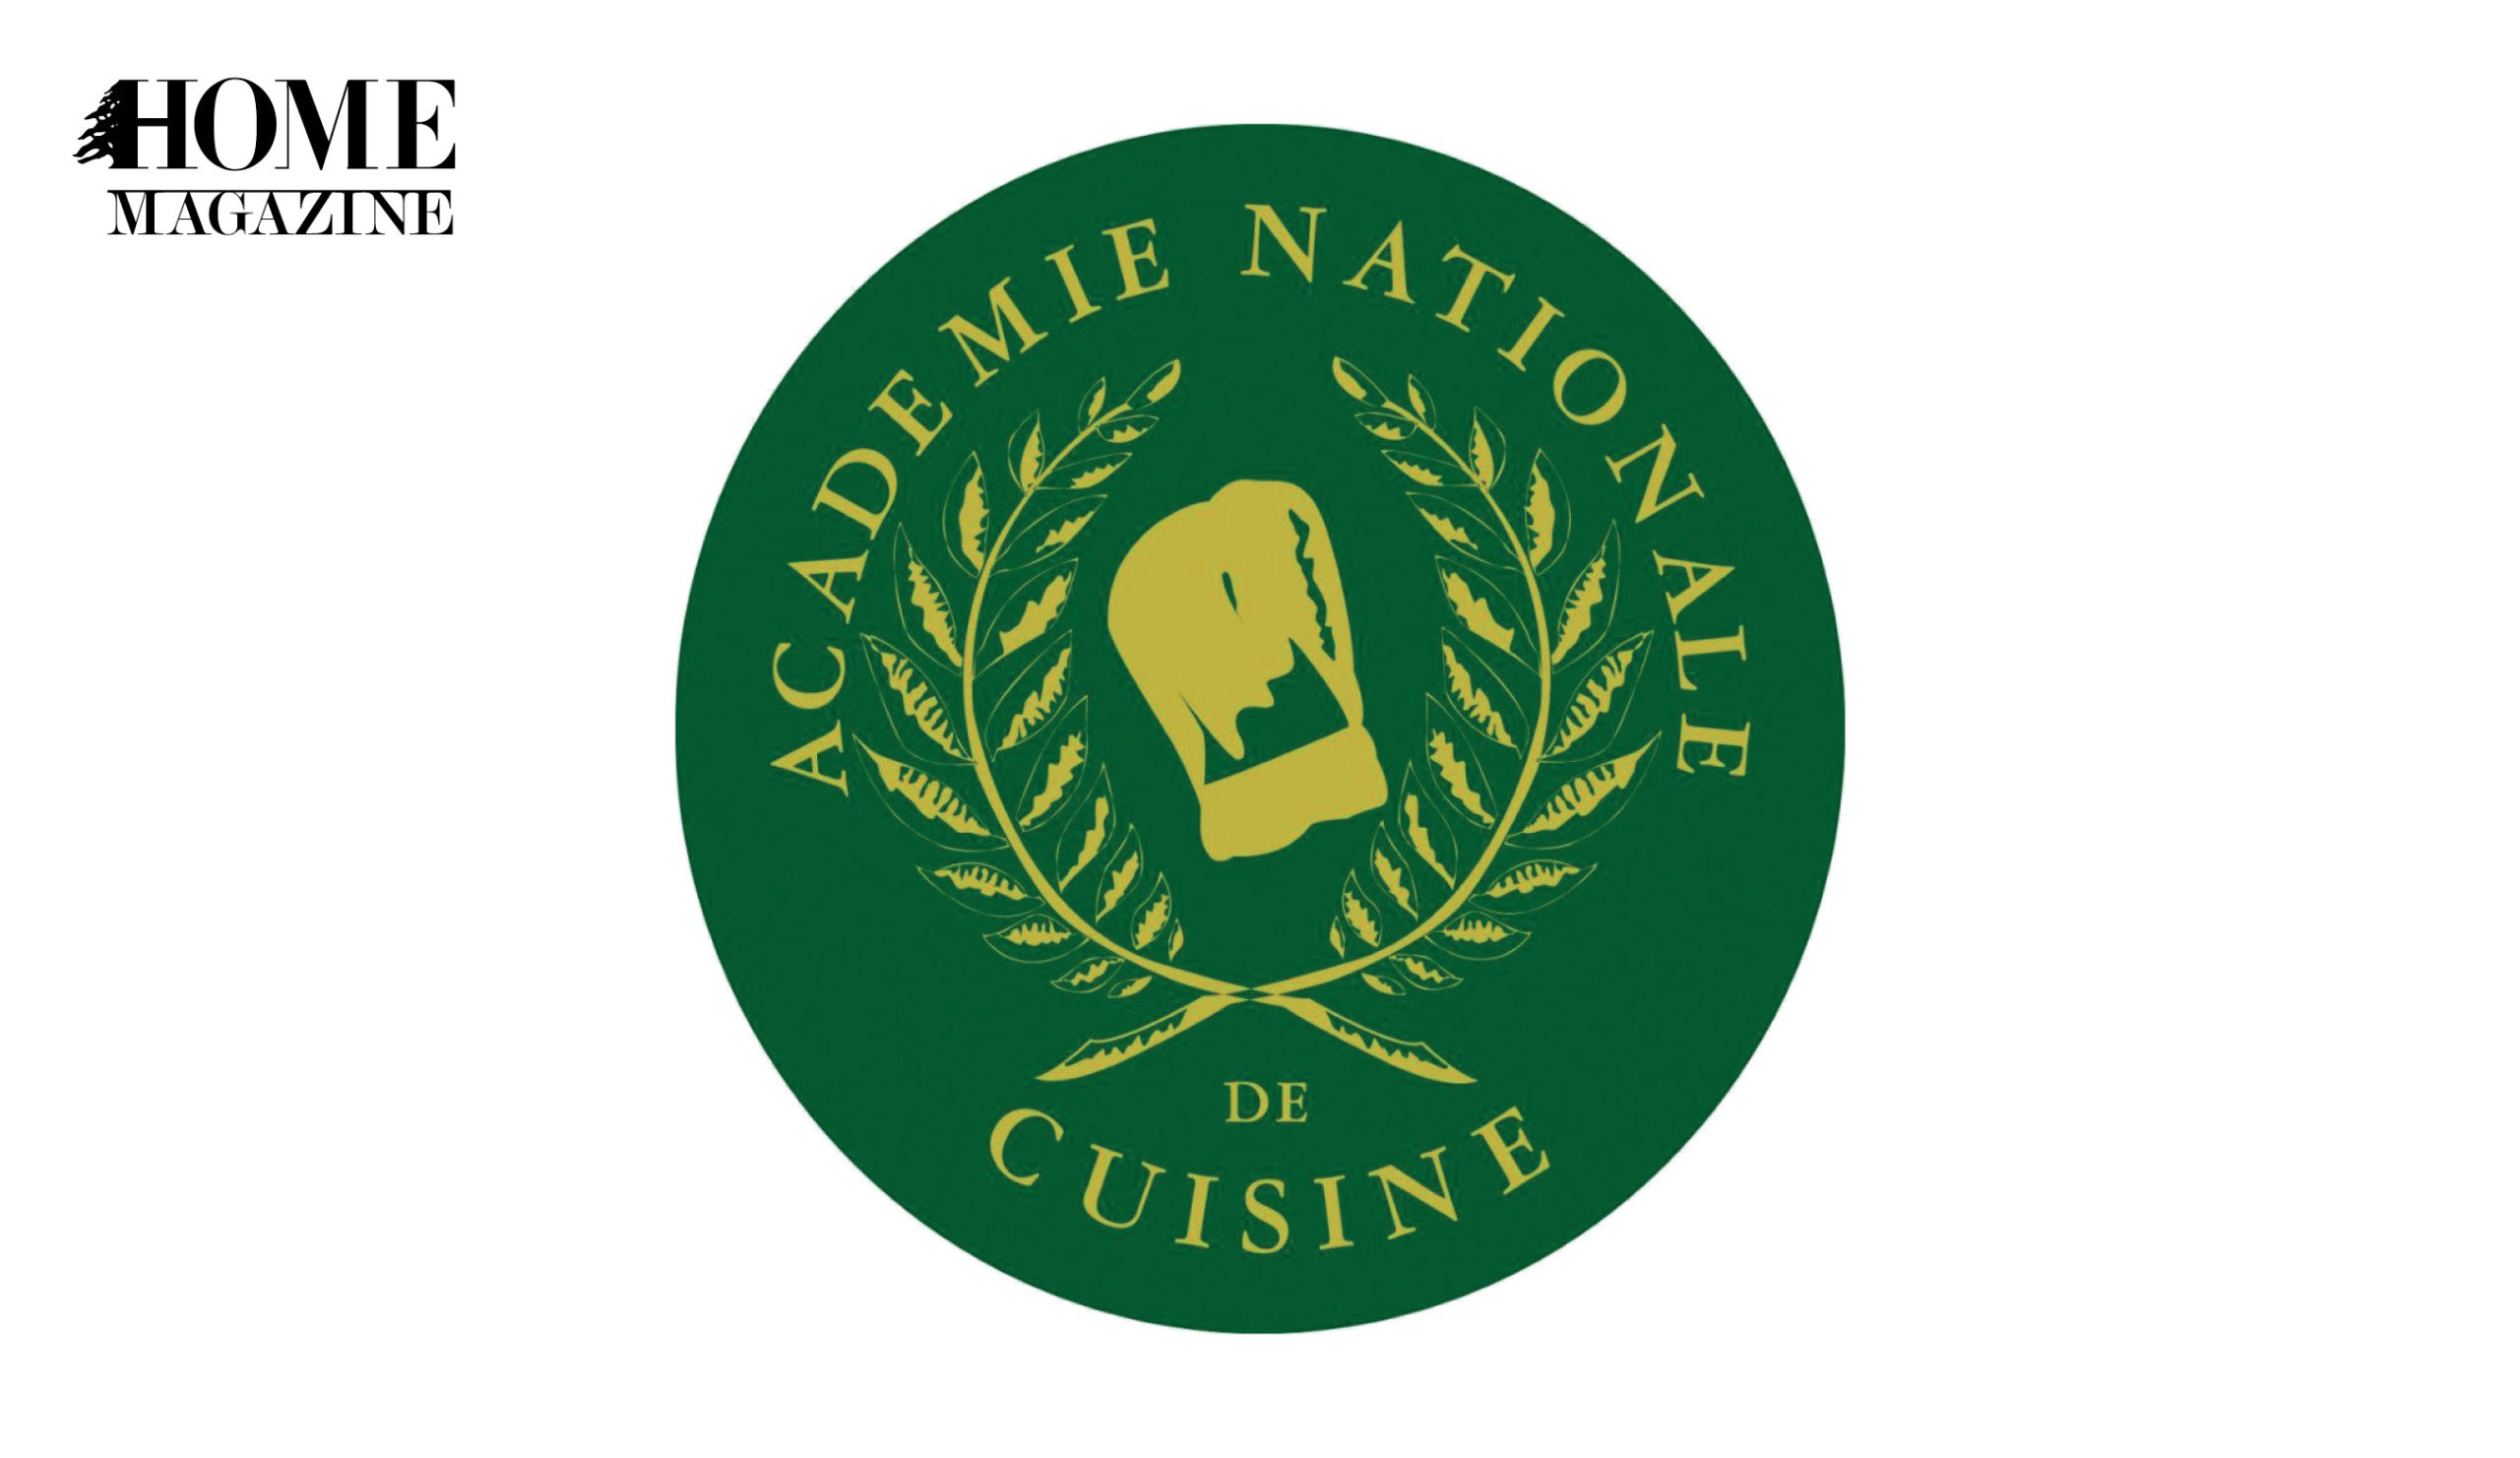 Green circled logo with text Academie National de Cuisine